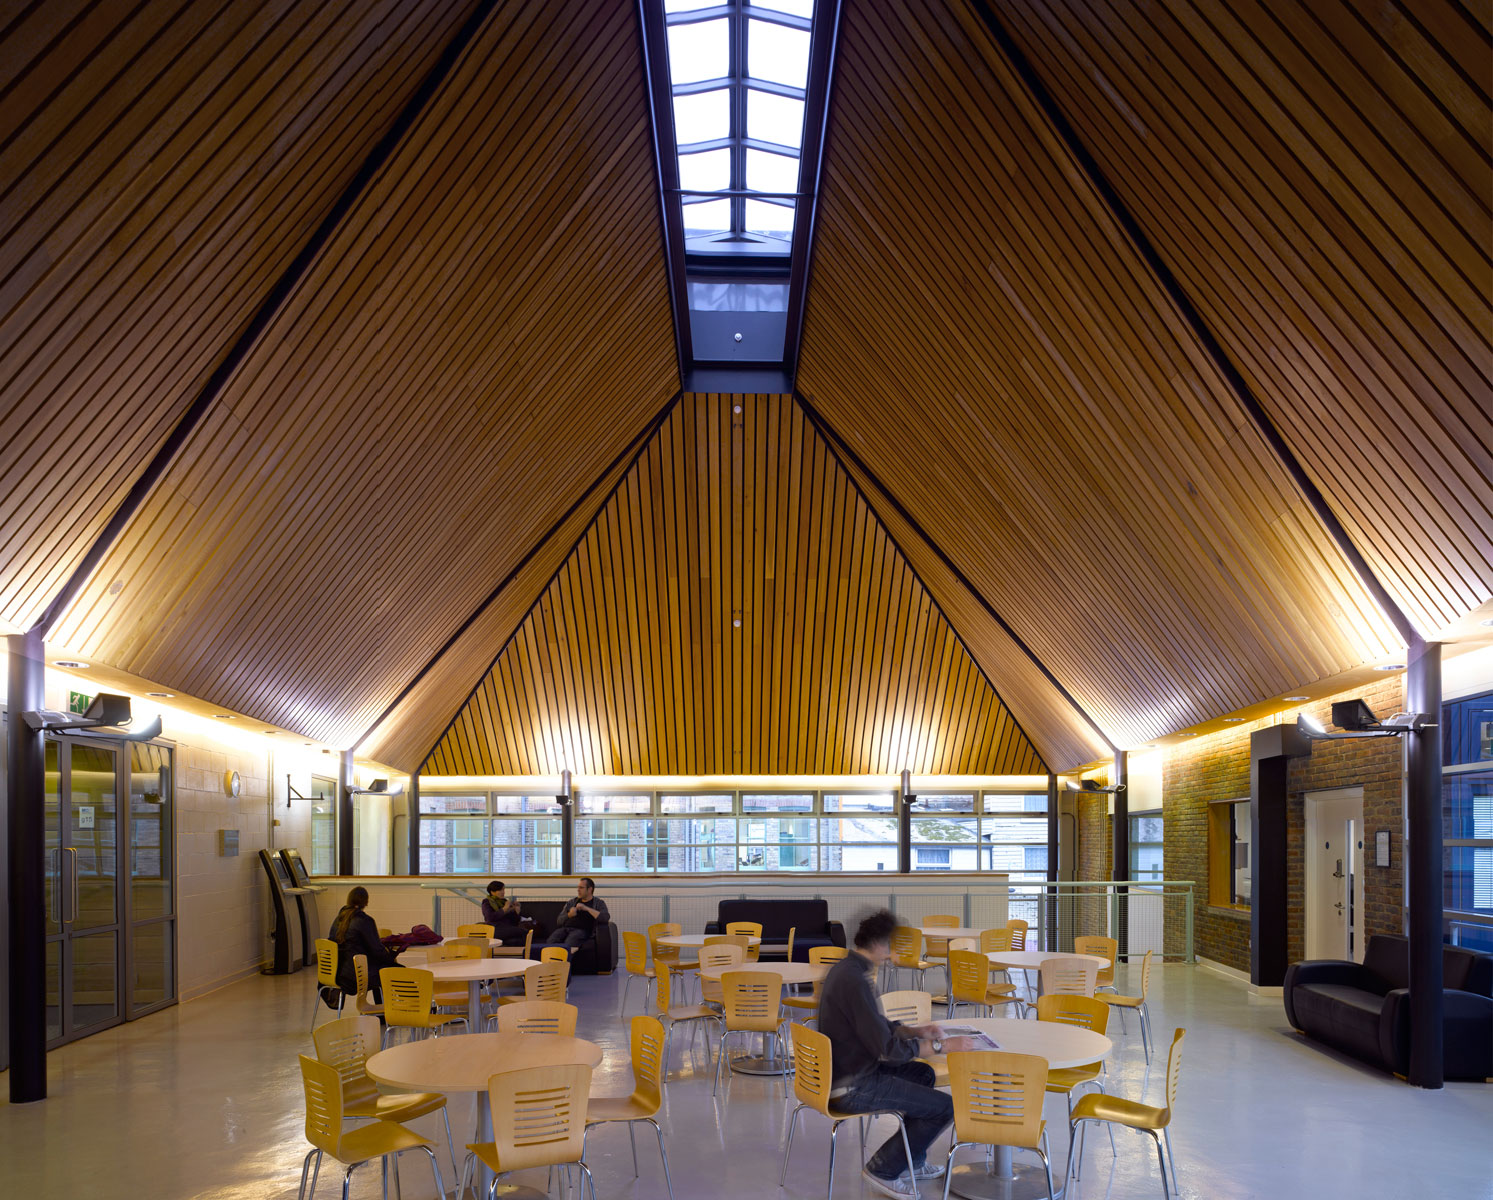 University Centre Folkestone interior view